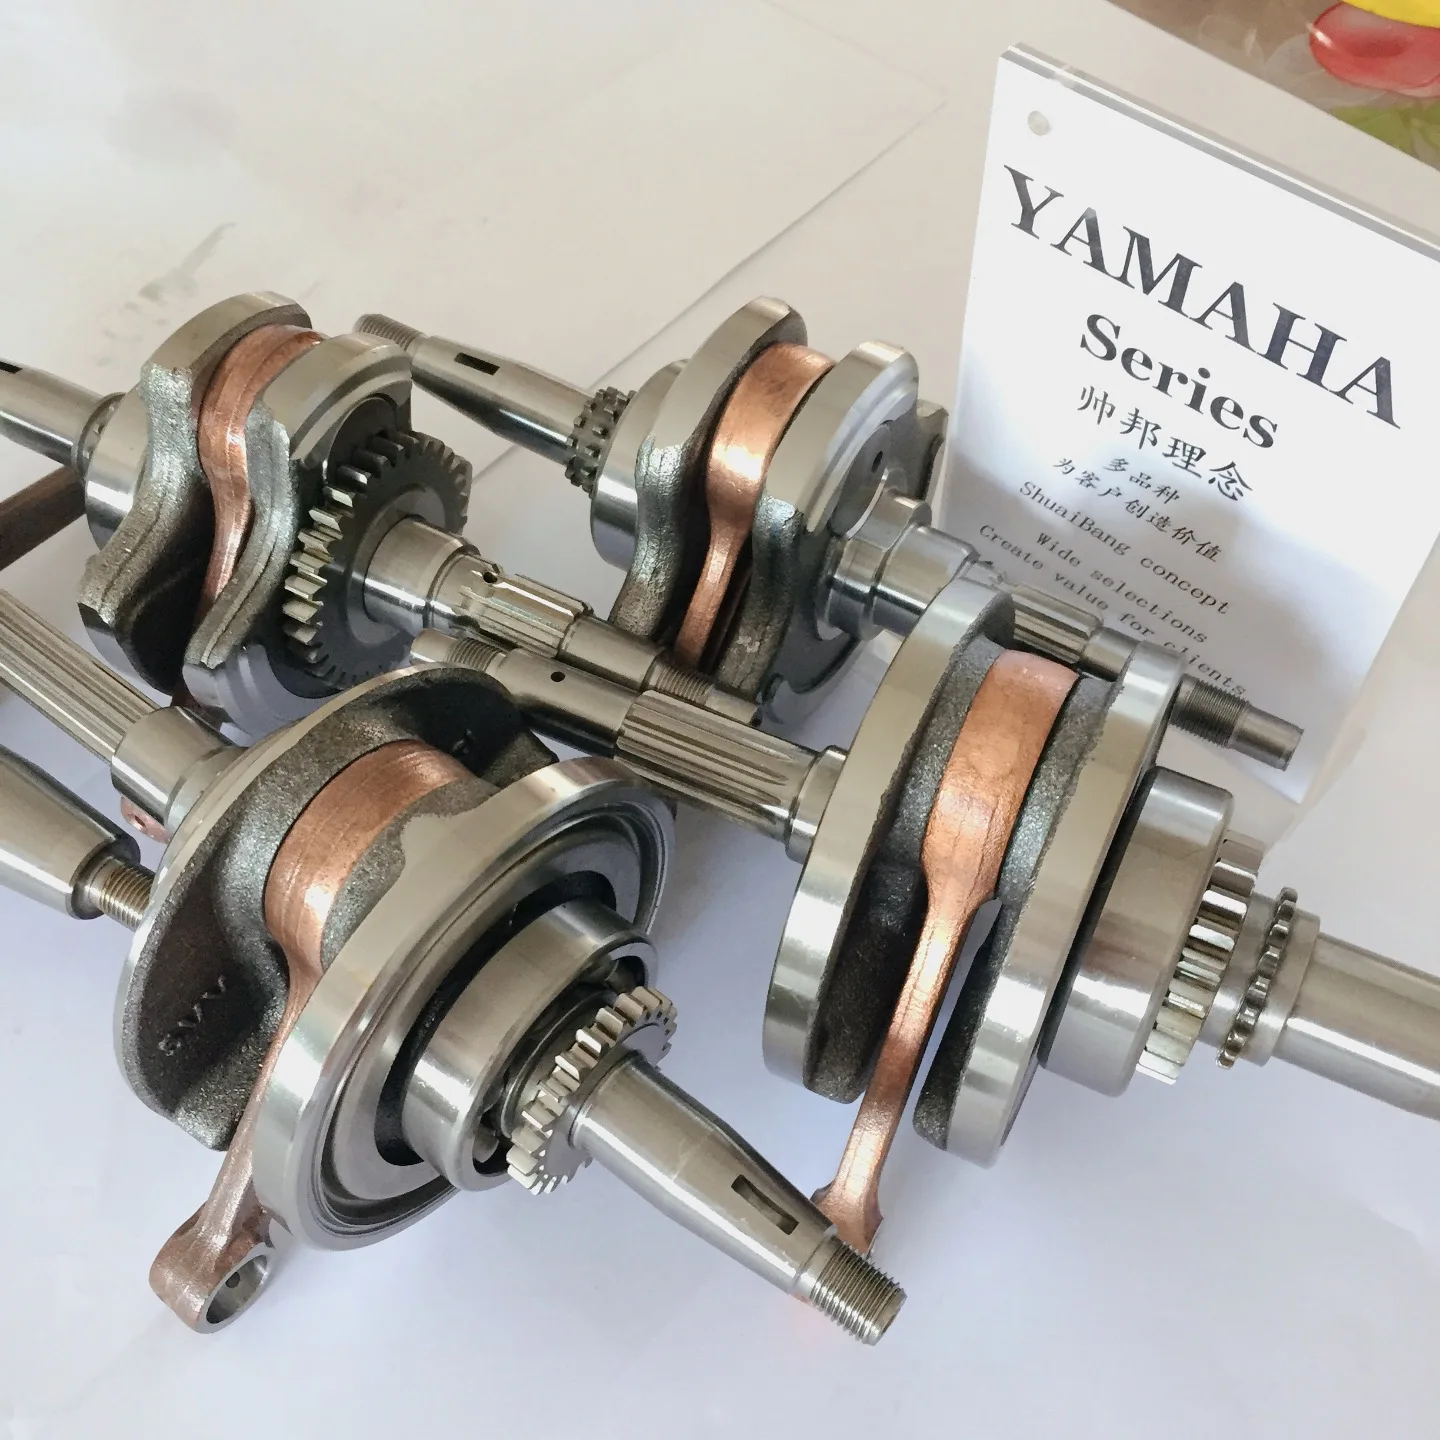 yamaha rx 100 engine price